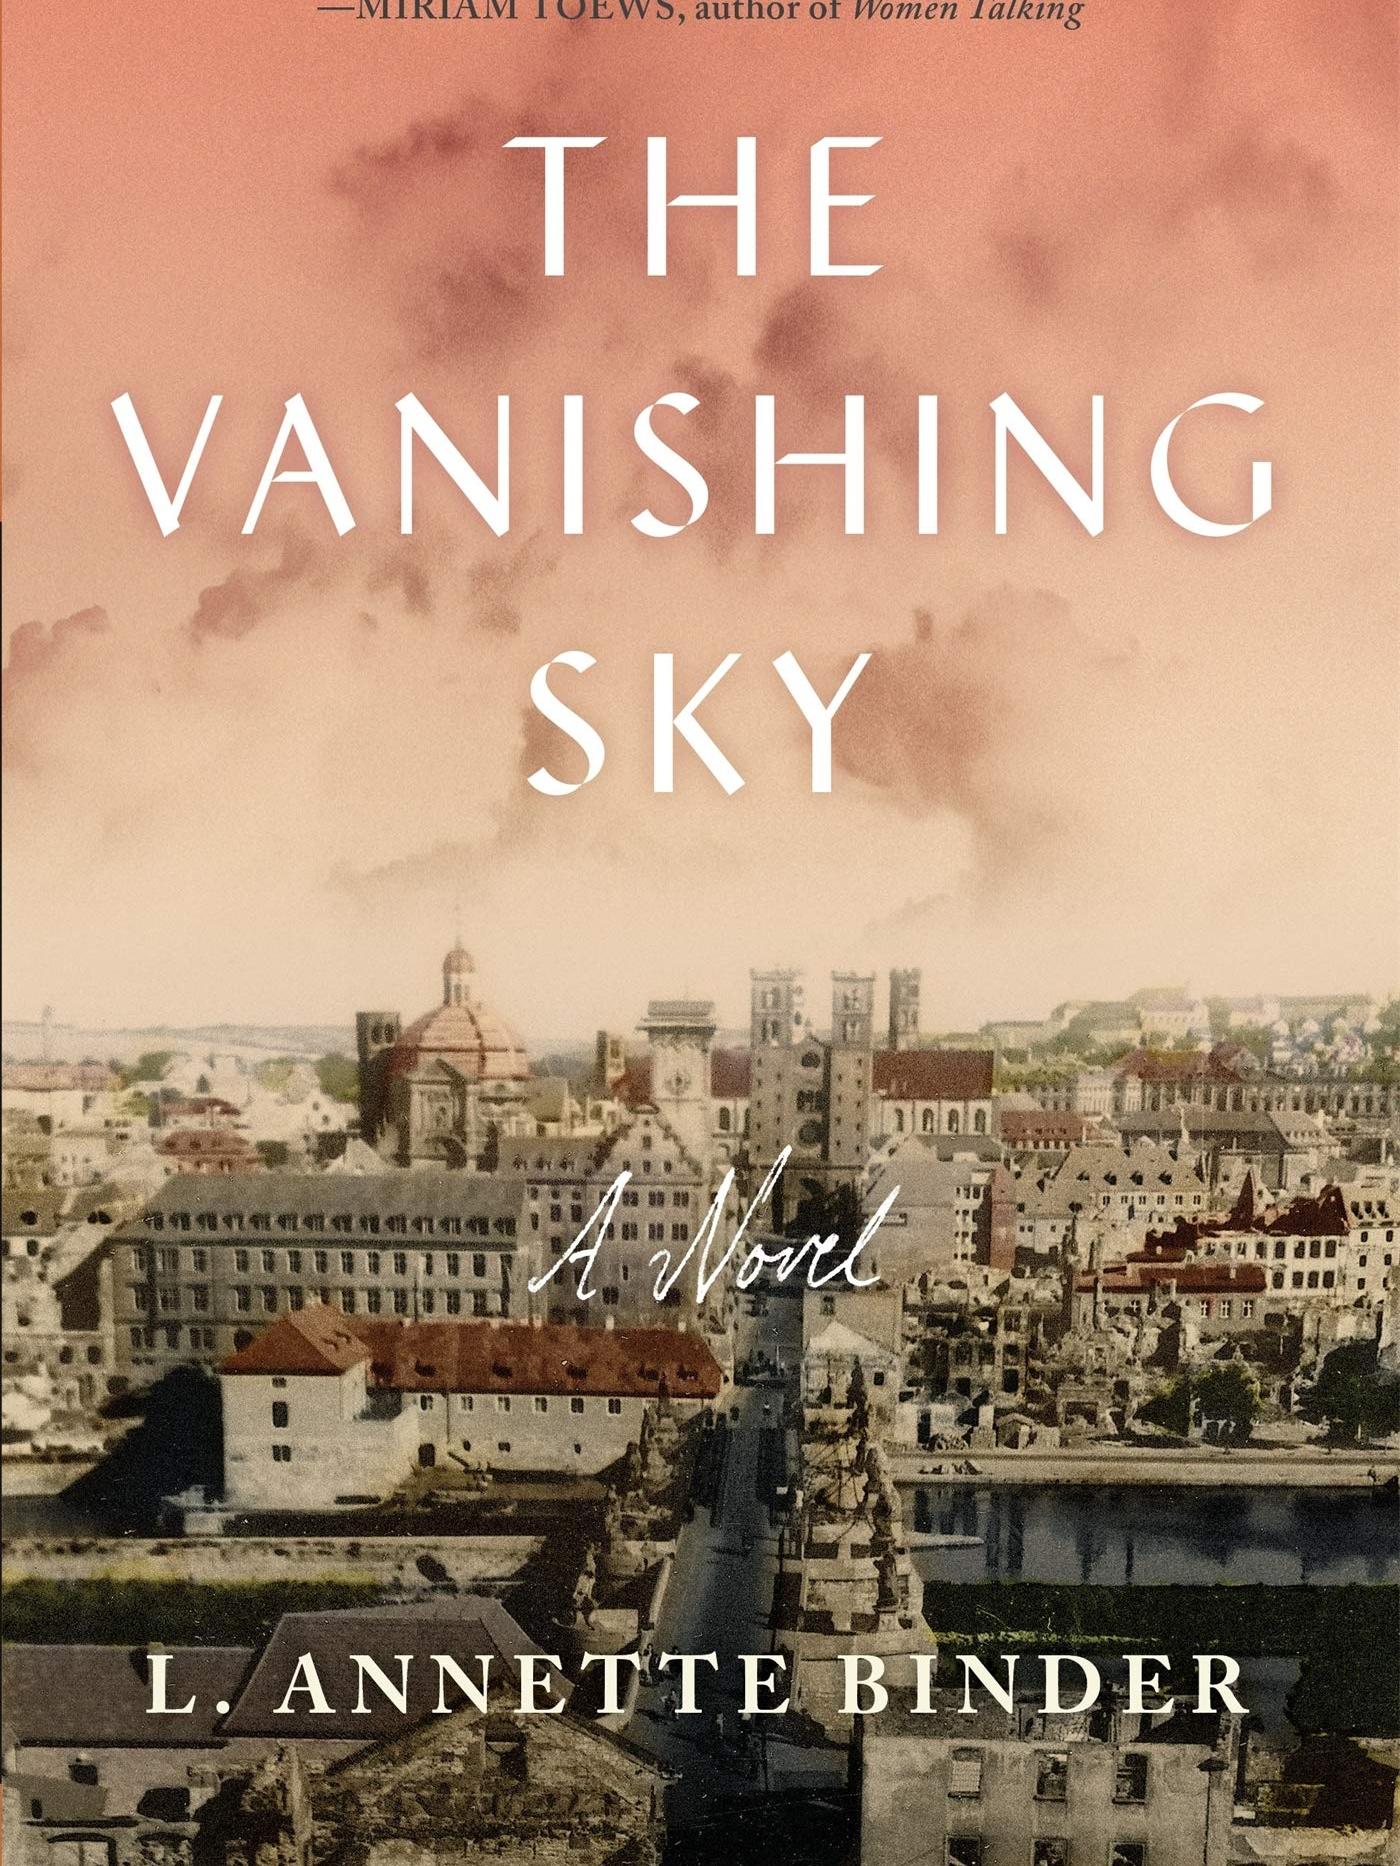 Vanishing Sky by L. Annette Binder